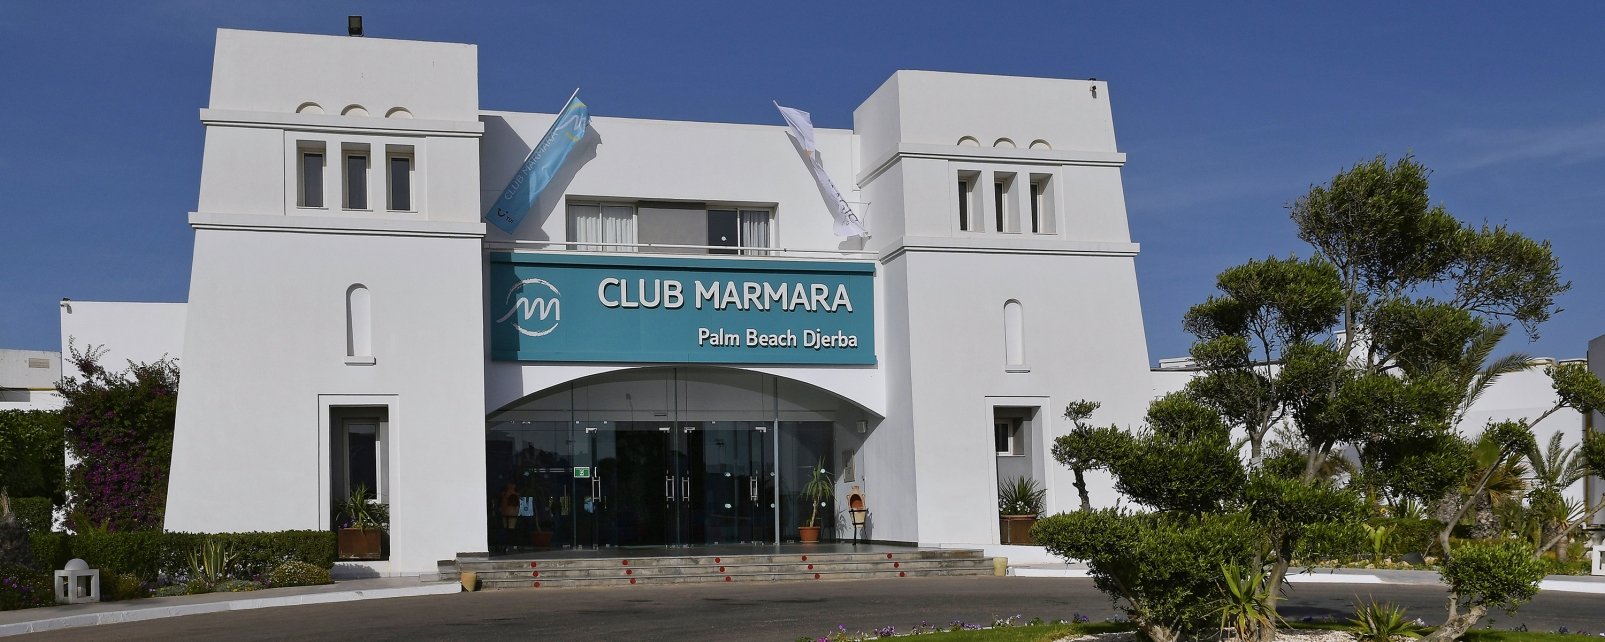  Club Marmara Palm Beach Djerba